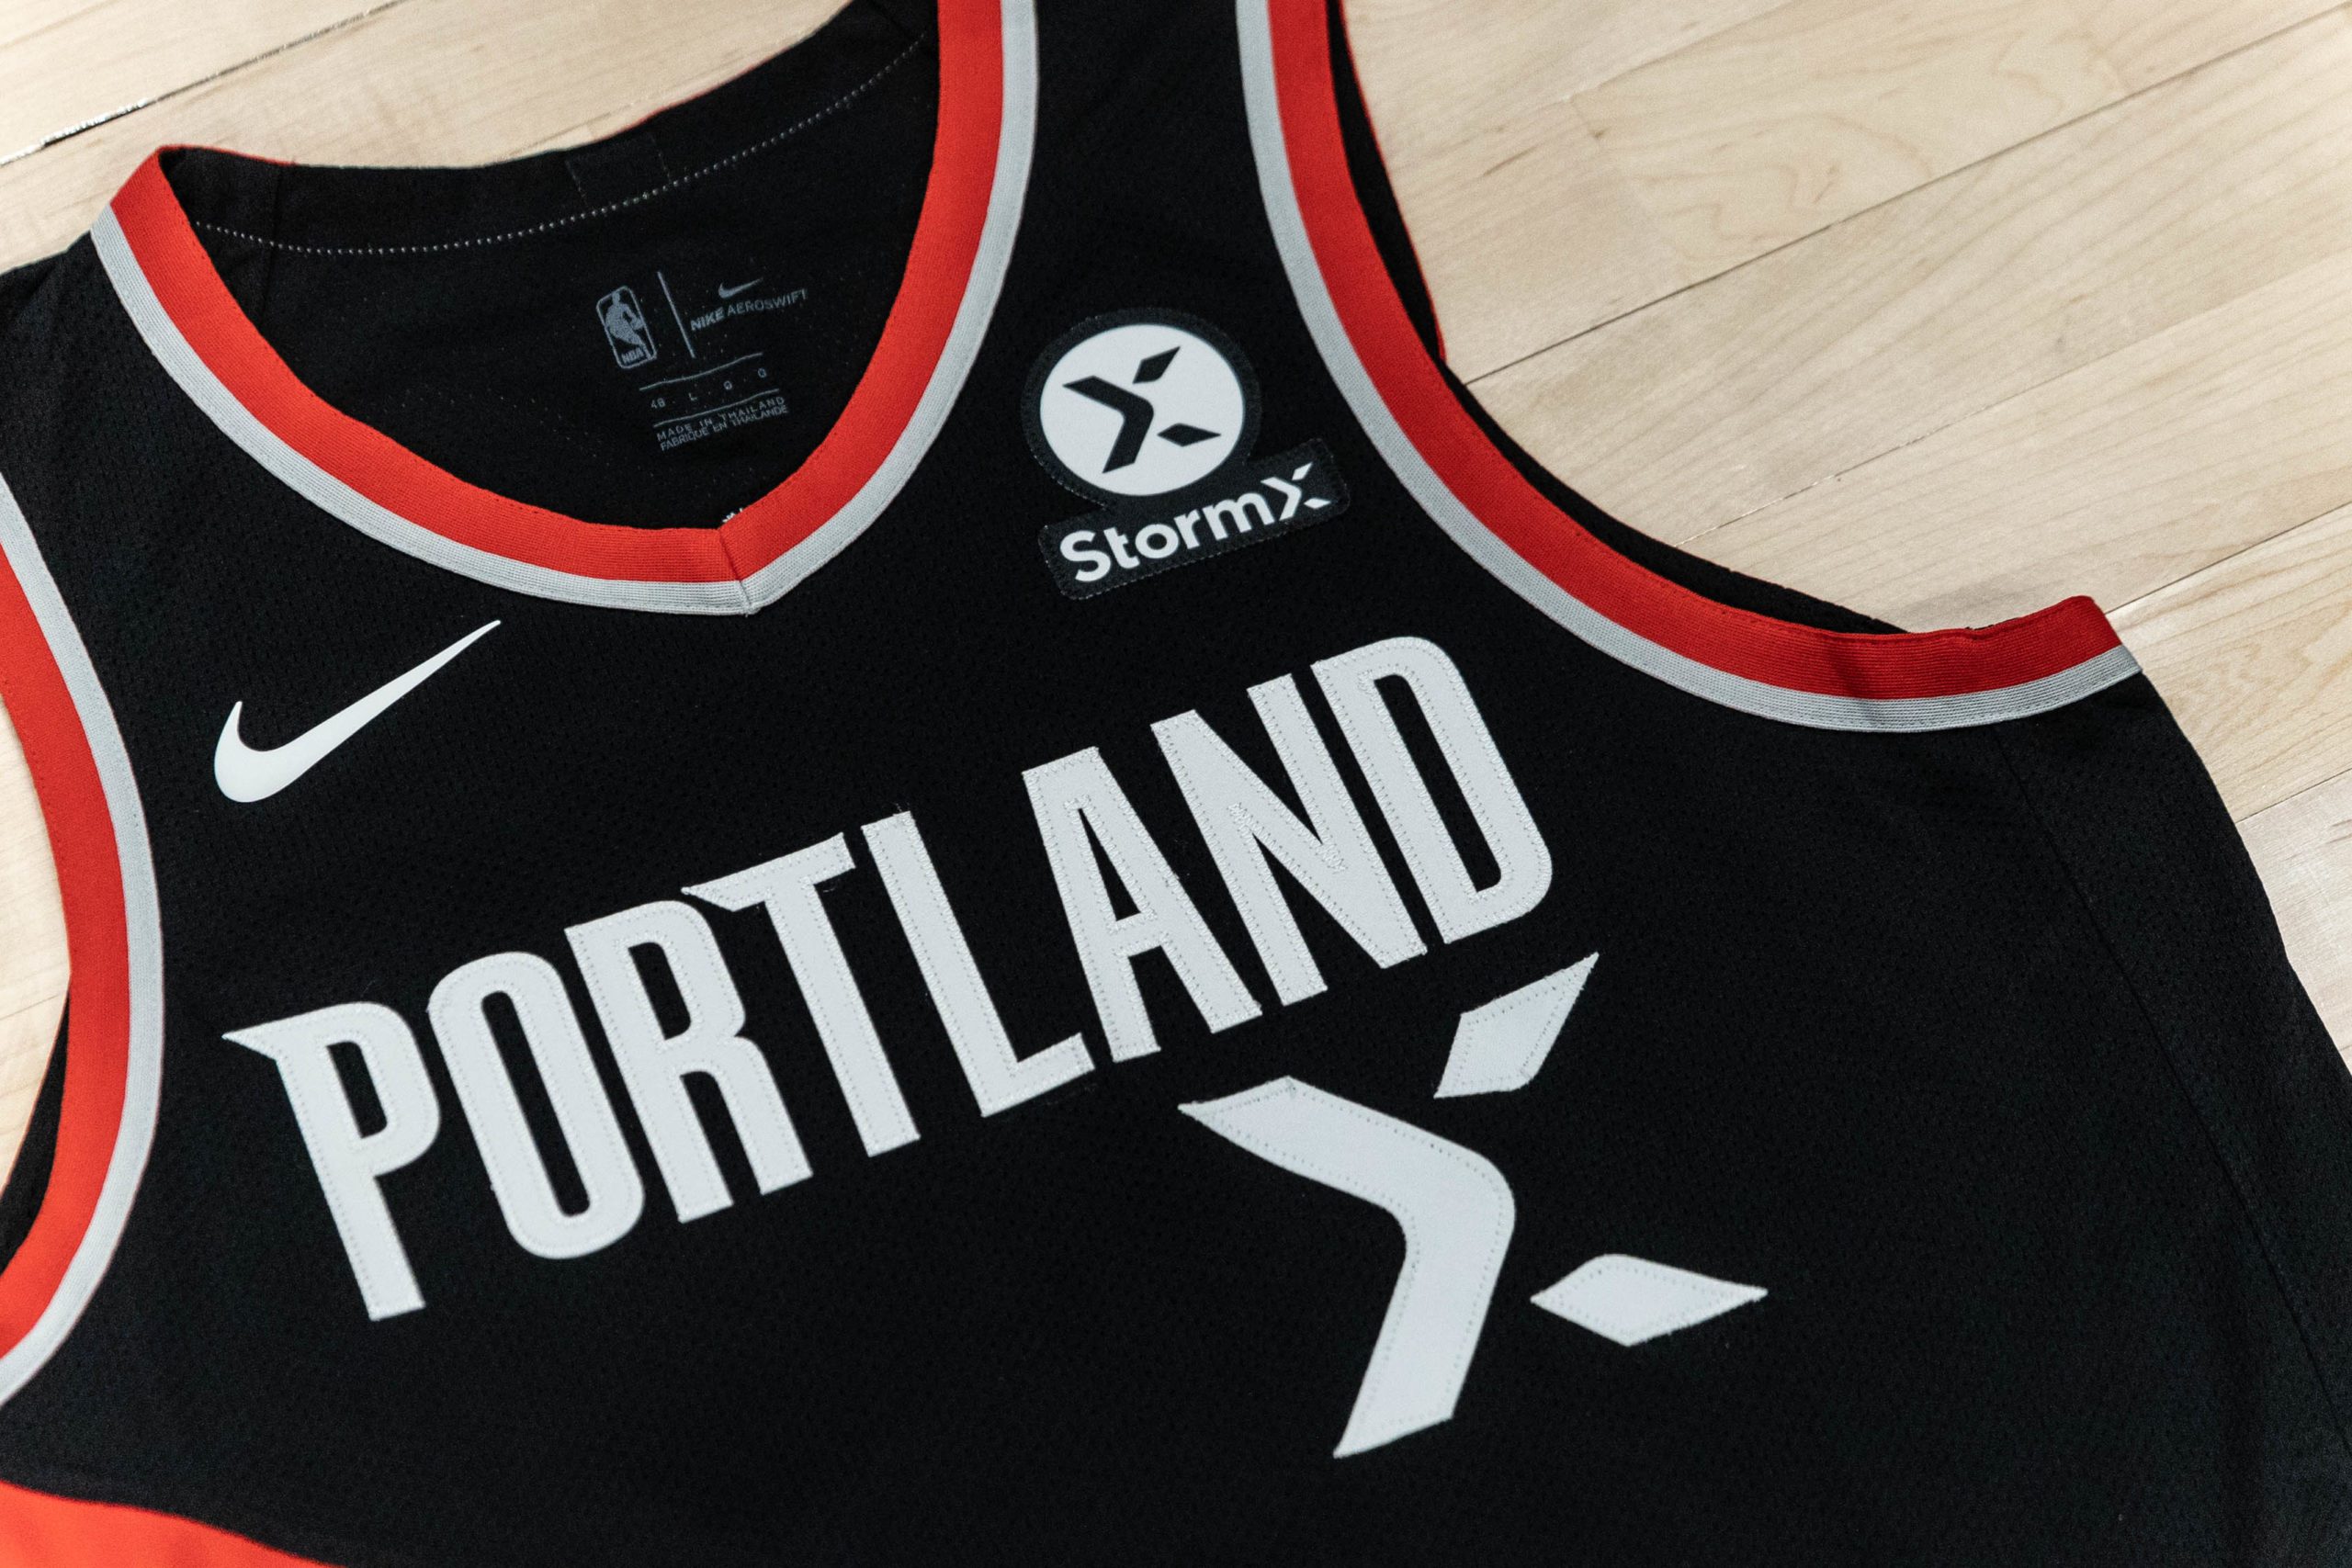 A review of all Portland Trail Blazers Nike jerseys